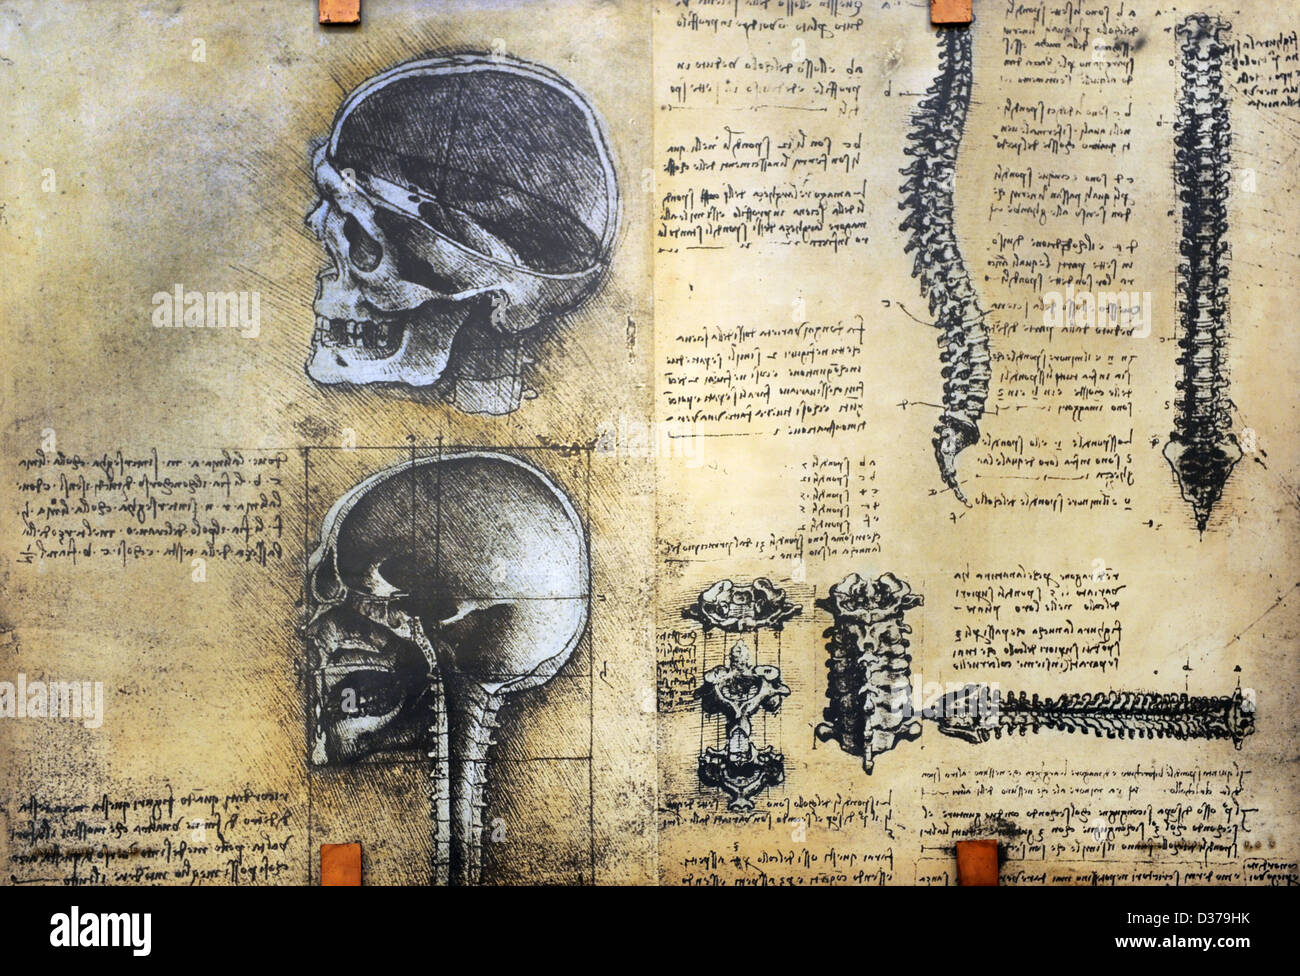 Study of anatomy by Leonardo Da Vinci. 15th century. Skeletal structure. Stock Photo